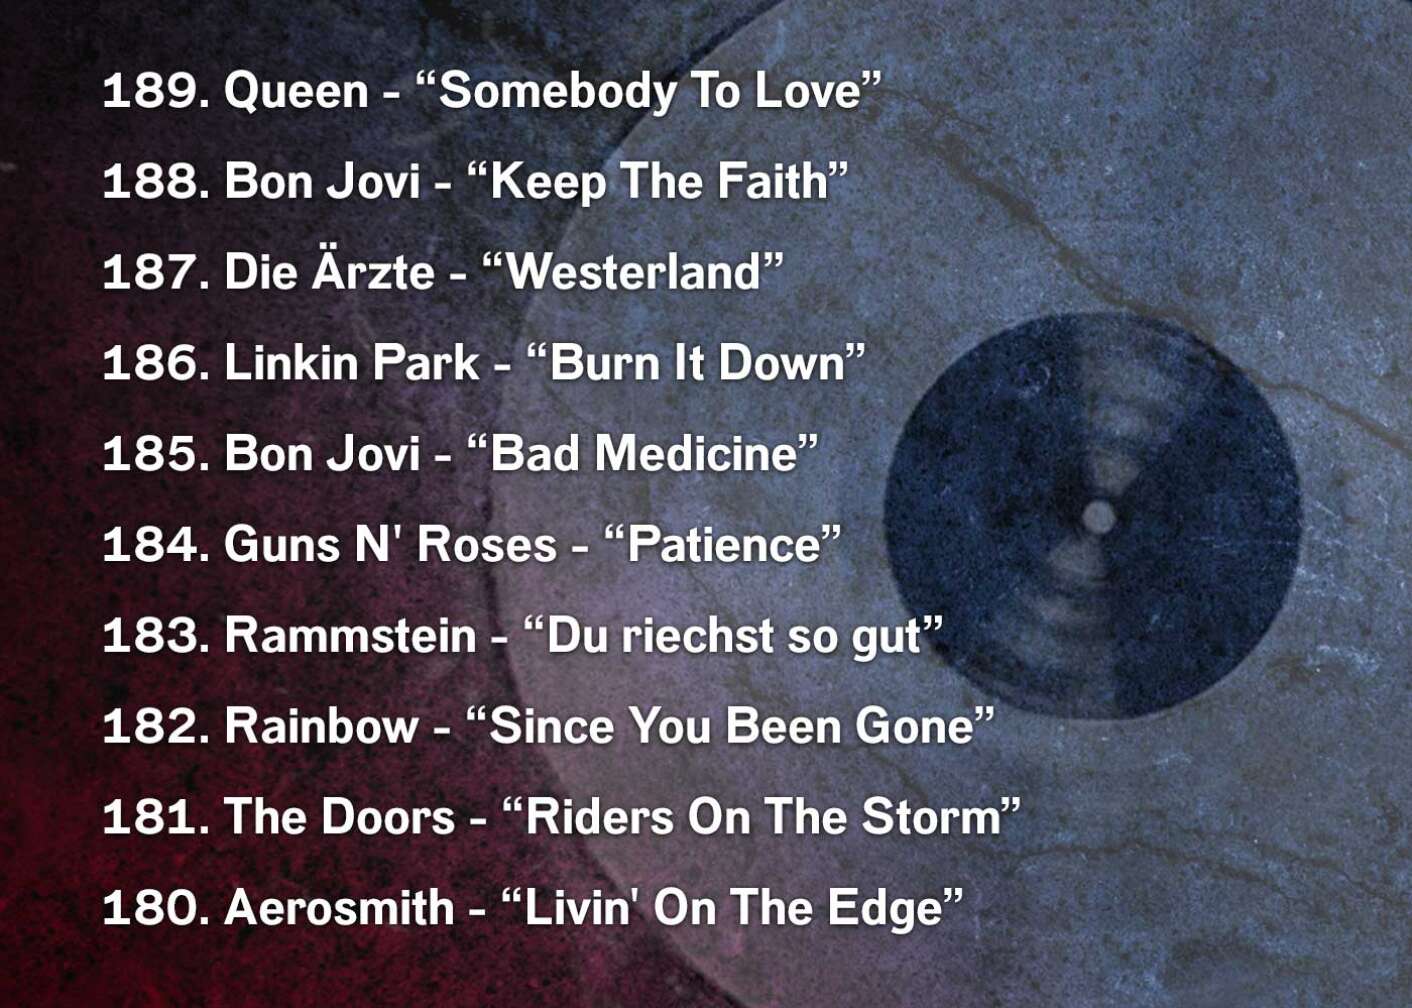 189. Queen - “Somebody To Love” 188. Bon Jovi - “Keep The Faith” 187. Die Ärzte - “Westerland” 186. Linkin Park - “Burn It Down” 185. Bon Jovi - “Bad Medicine” 184. Guns N' Roses - “Patience” 183. Rammstein - “Du riechst so gut” 182. Rainbow - “Since You Been Gone” 181. The Doors - “Riders On The Storm” 180. Aerosmith - “Livin' On The Edge”